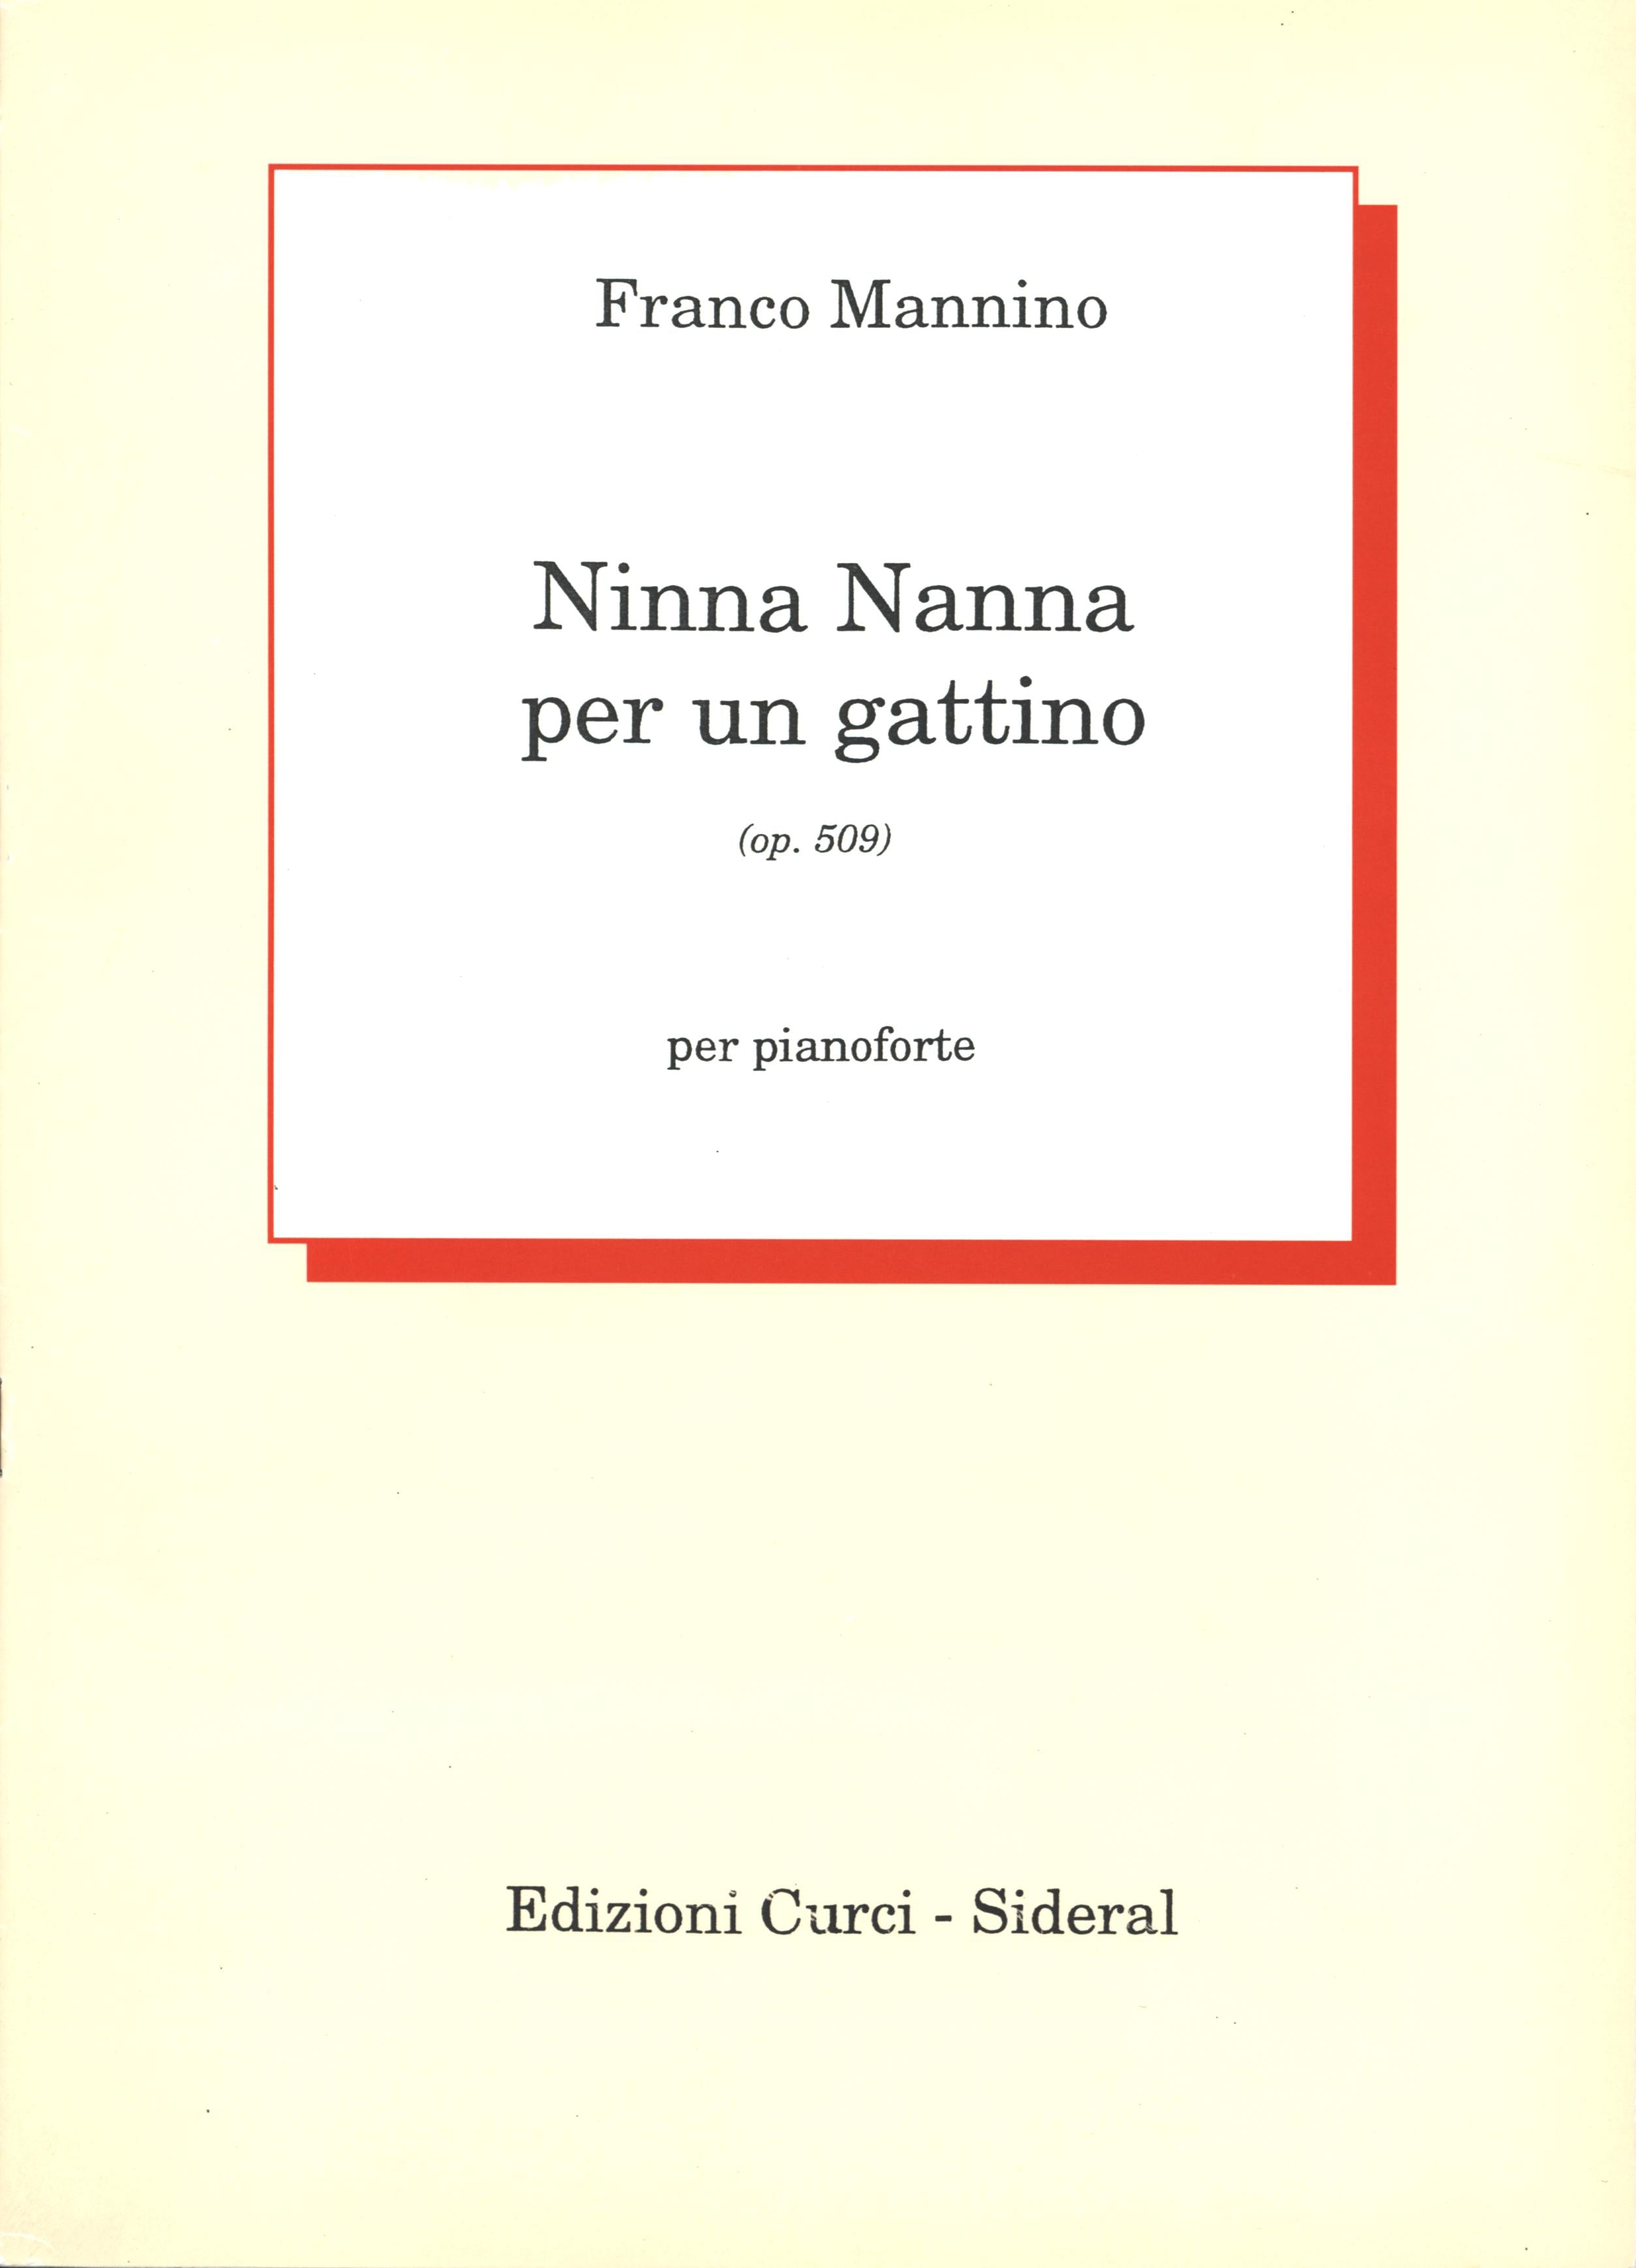 Mannino: Ninna Nanna per un gattino, Op. 509 - Ficks Music